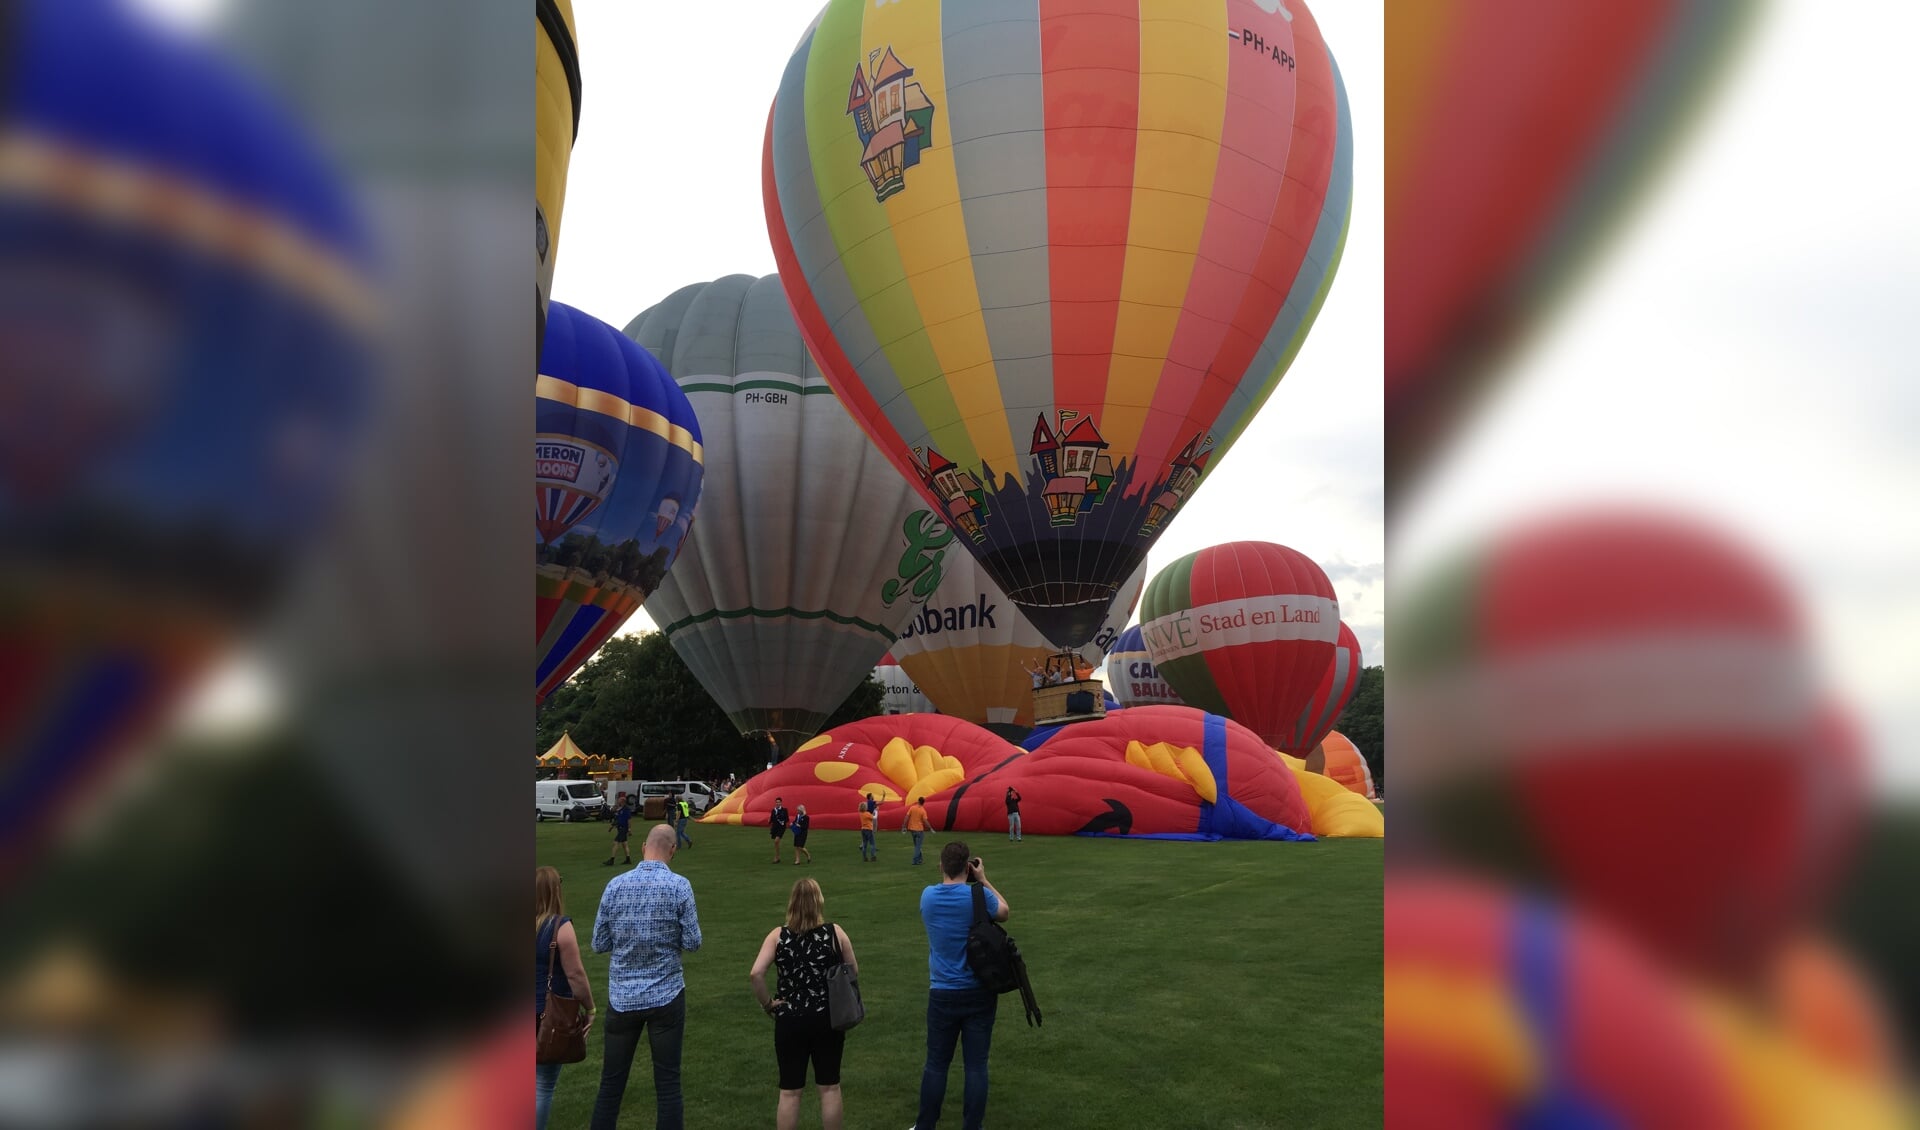 Ook bij Wenters Ballooning: diverse luchtballonnen de lucht in. Foto: PR